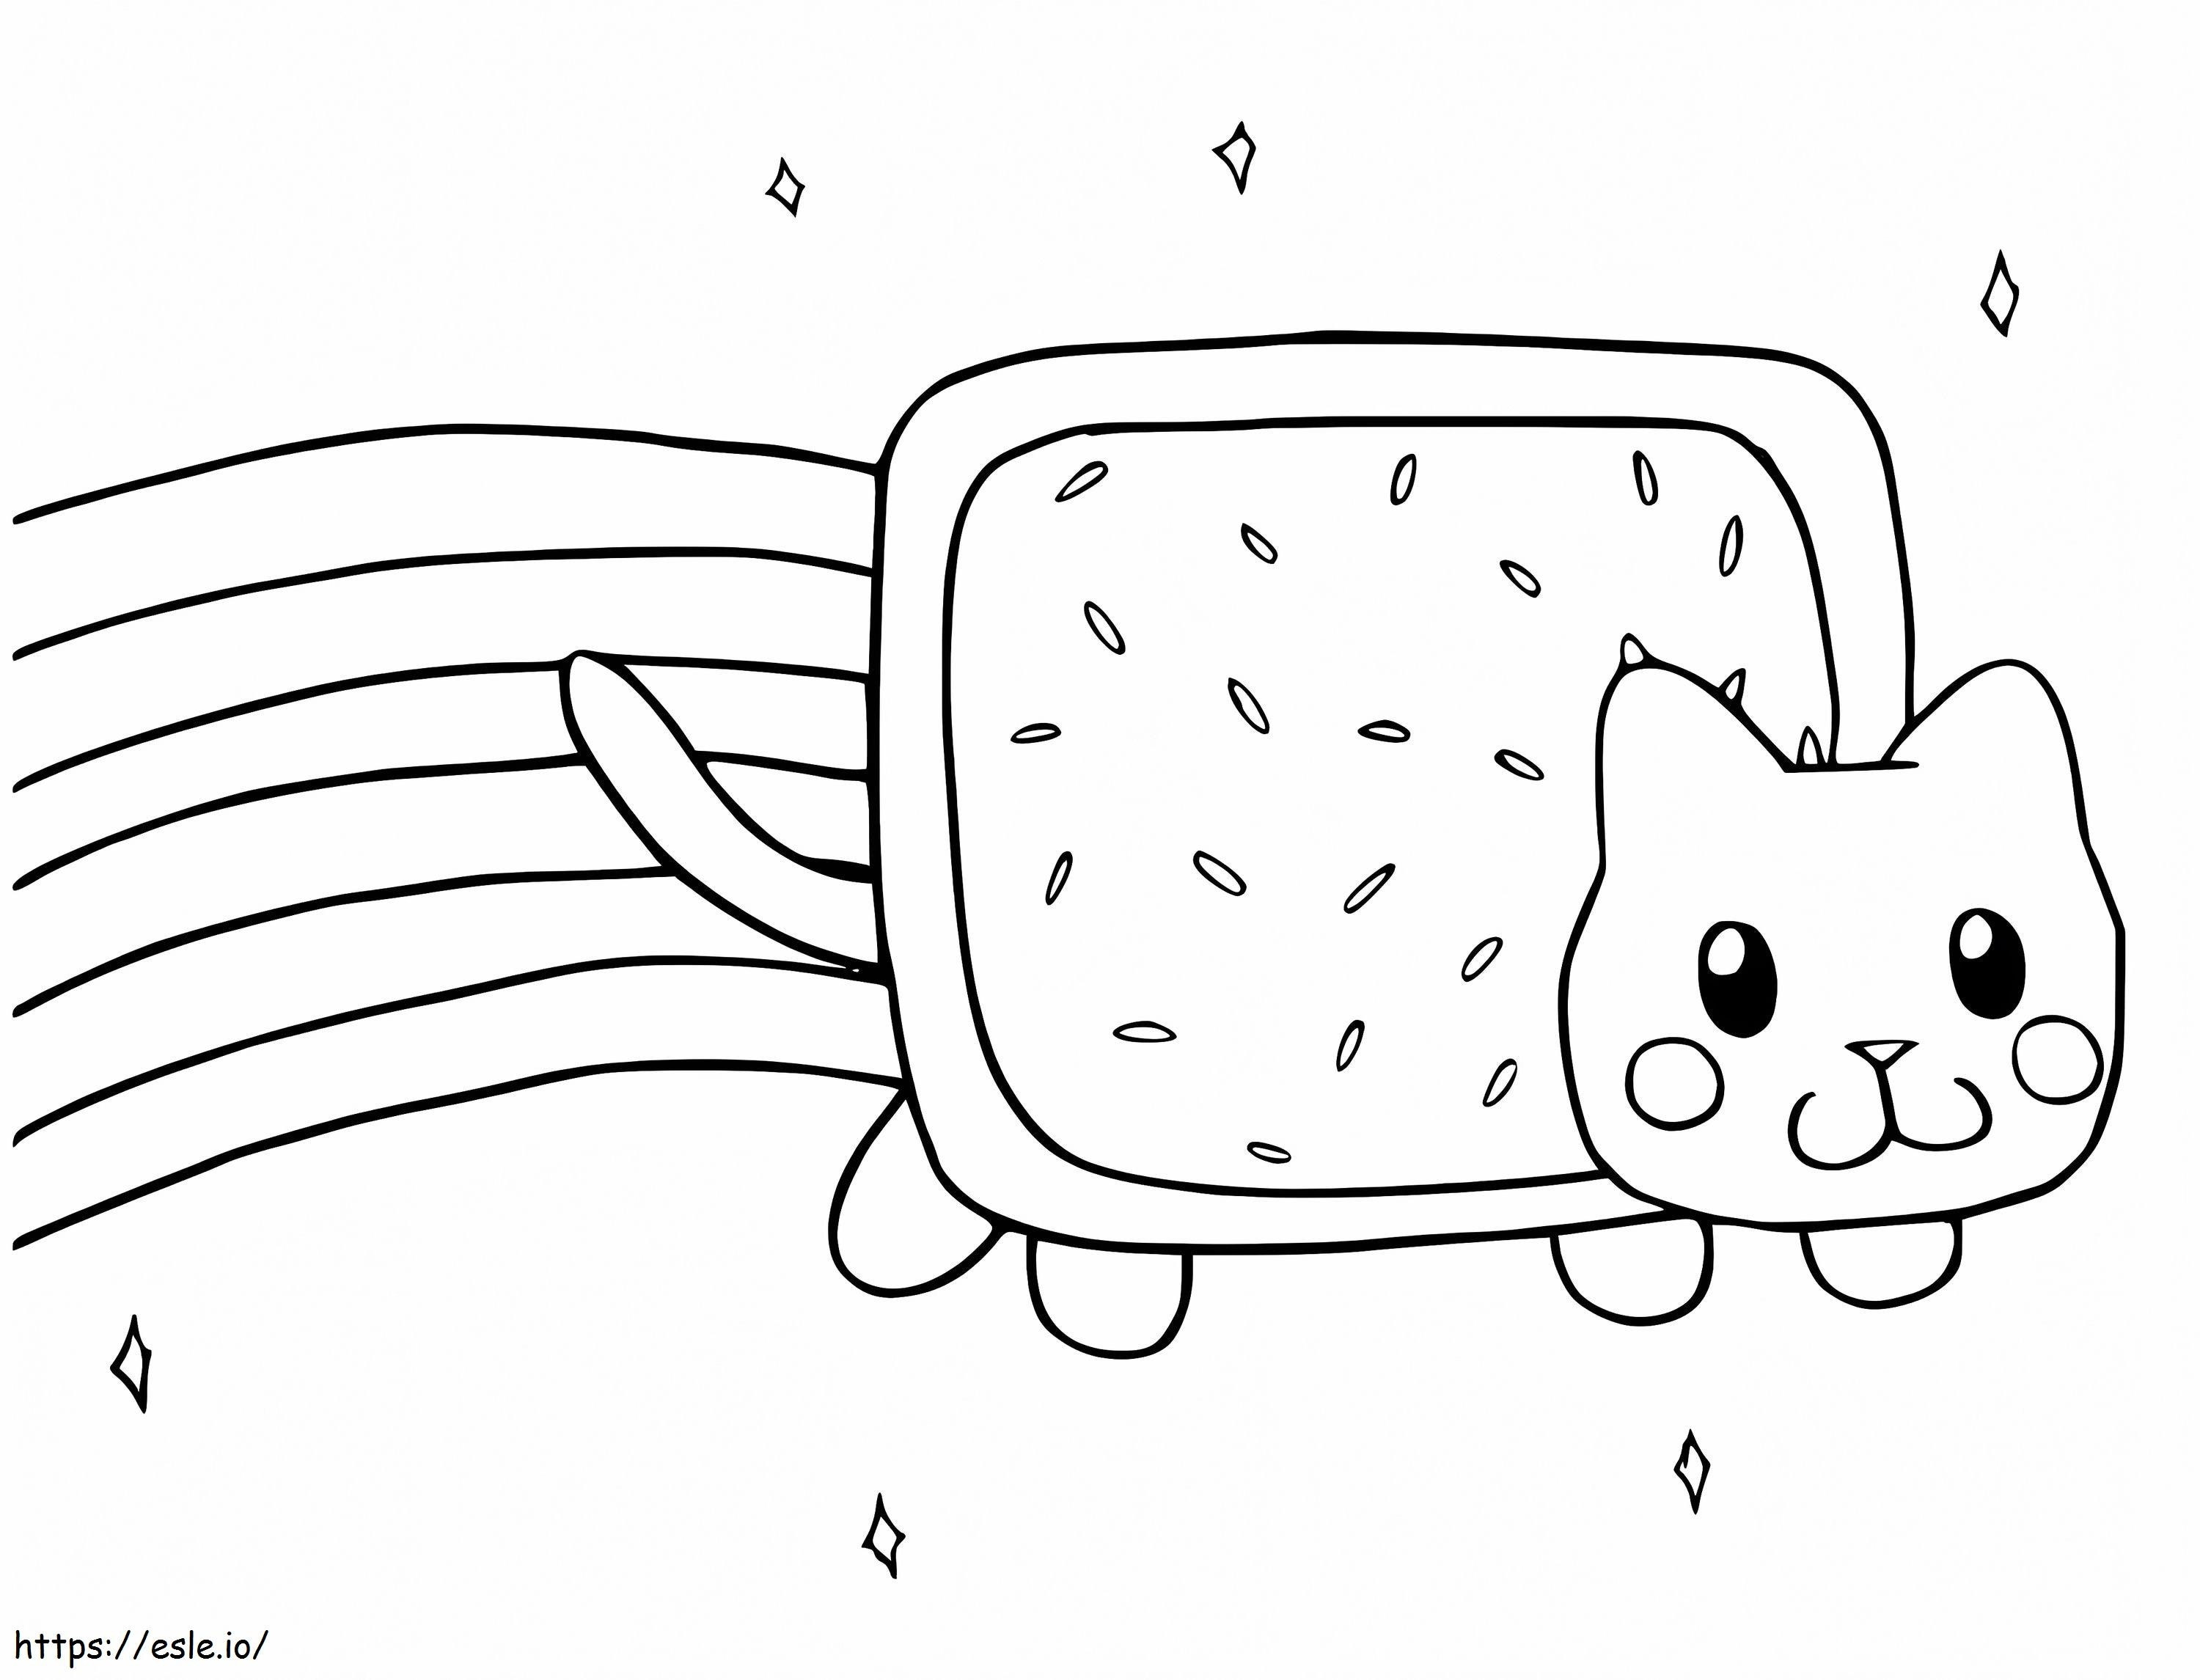 Free Printable Nyan Cat coloring page